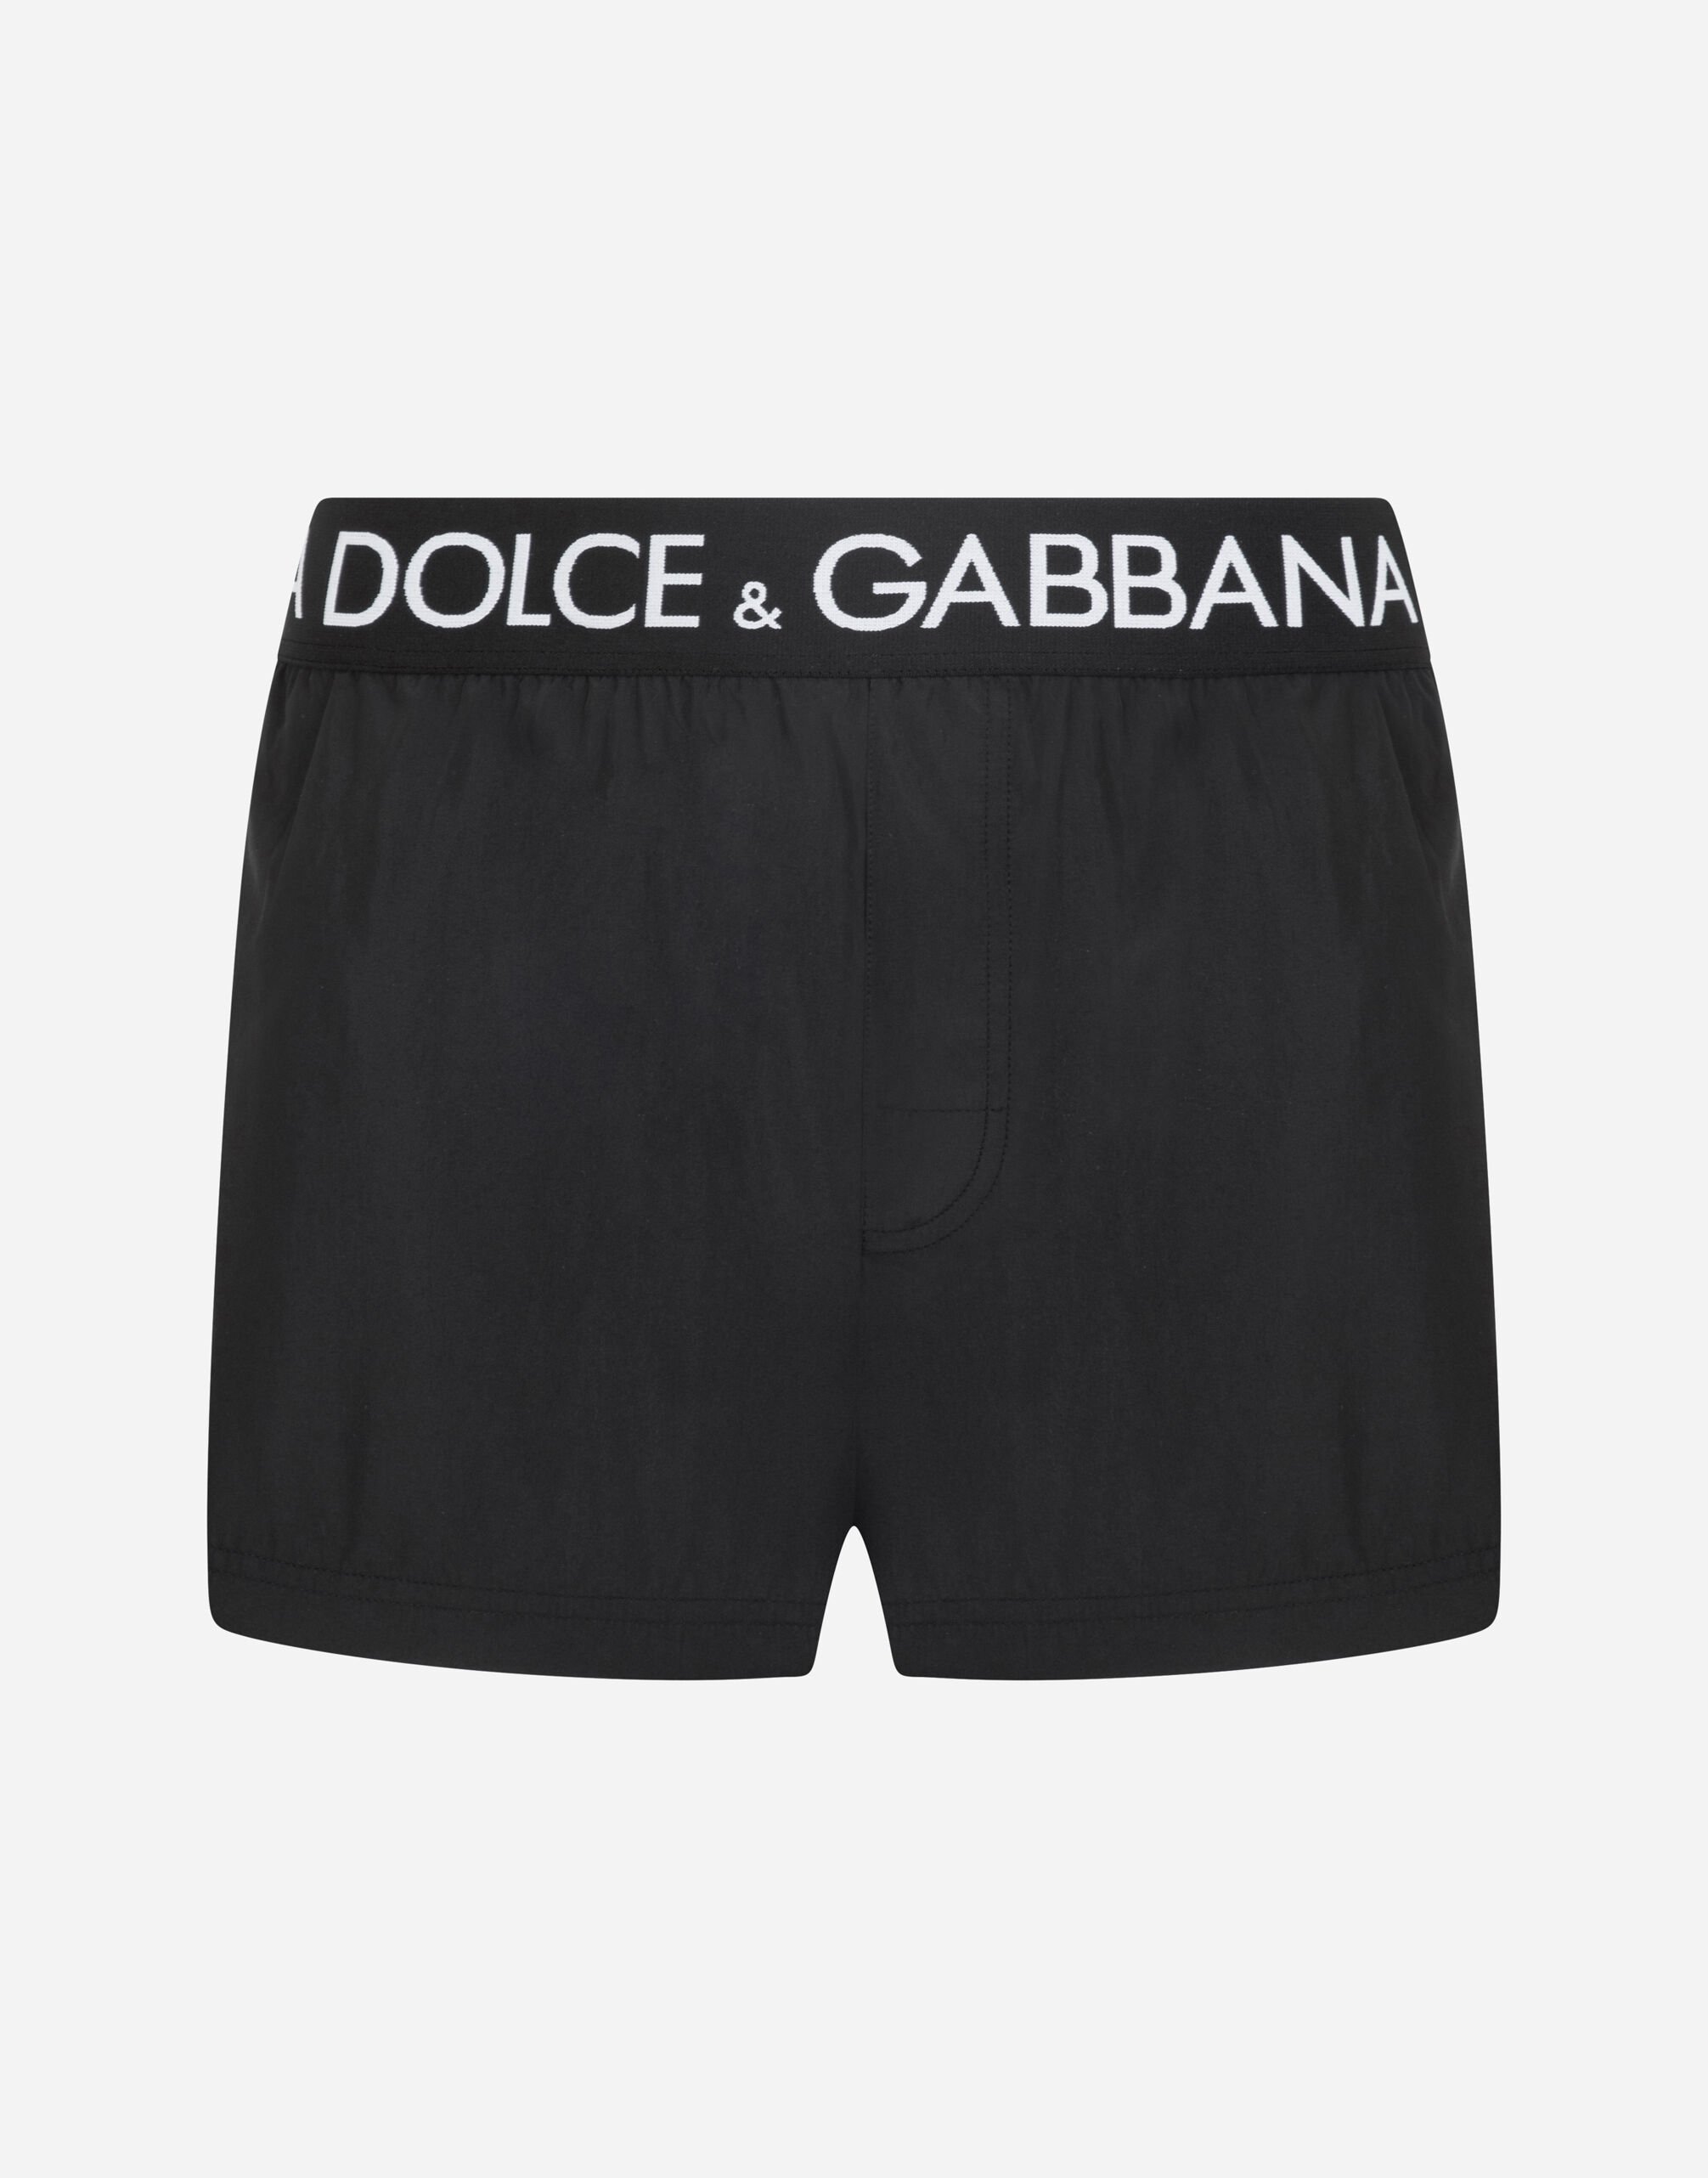 Dolce & Gabbana Short swim trunks with branded stretch waistband Black M4E37TFUSFW